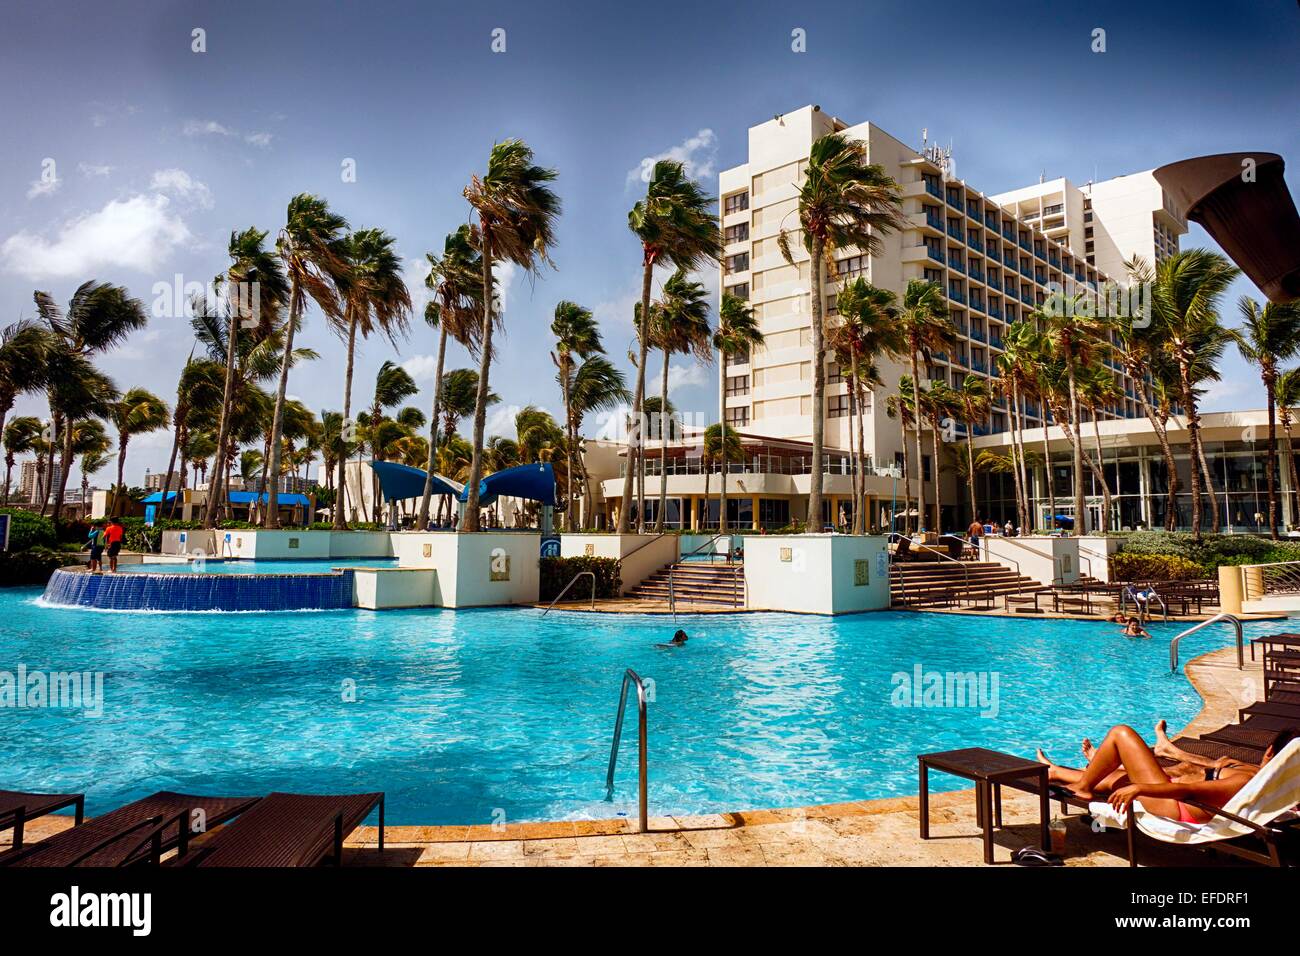 People Relaxing at Poolside, Caribe Hilton, San Juan, Puerto Rico. Stock Photo